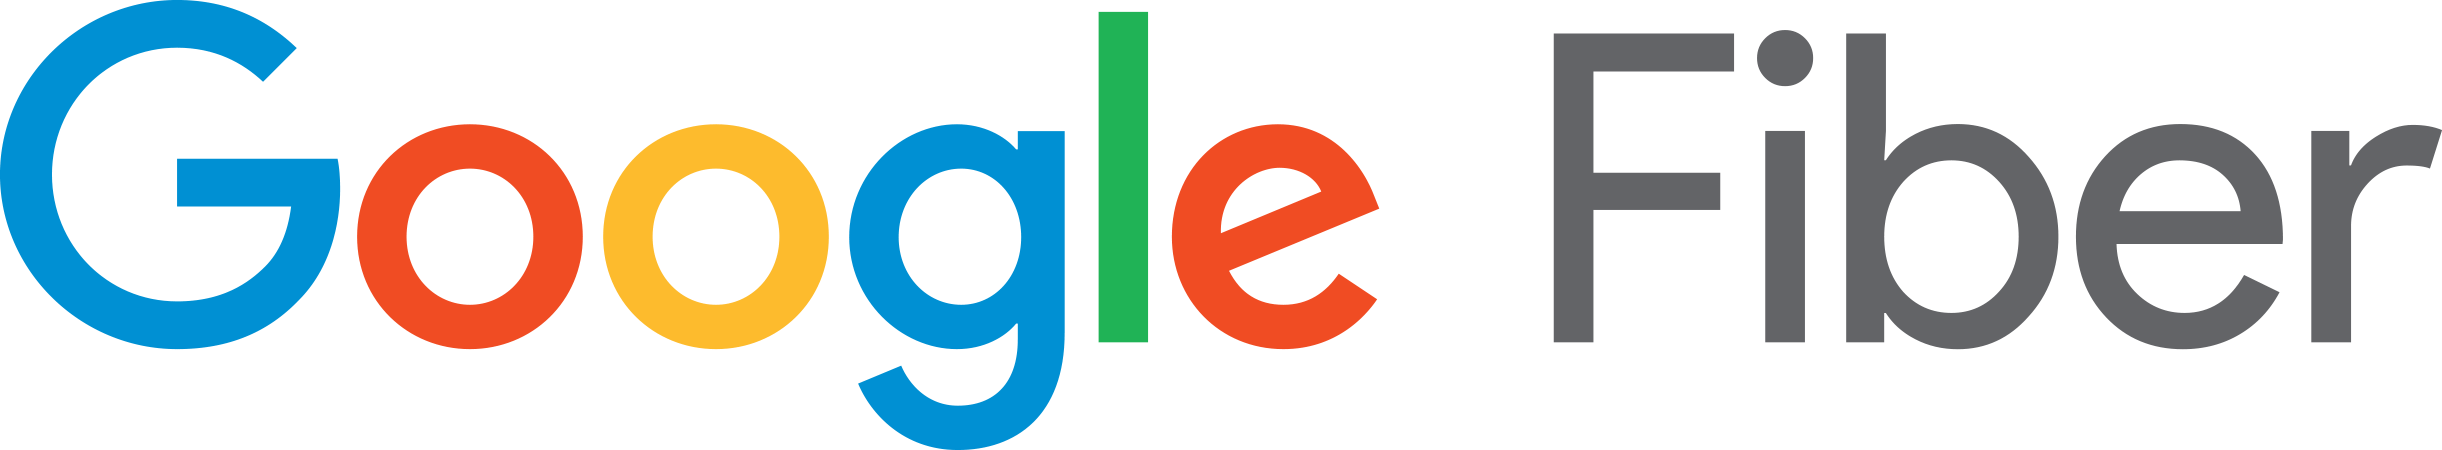 GoogleFiber.png